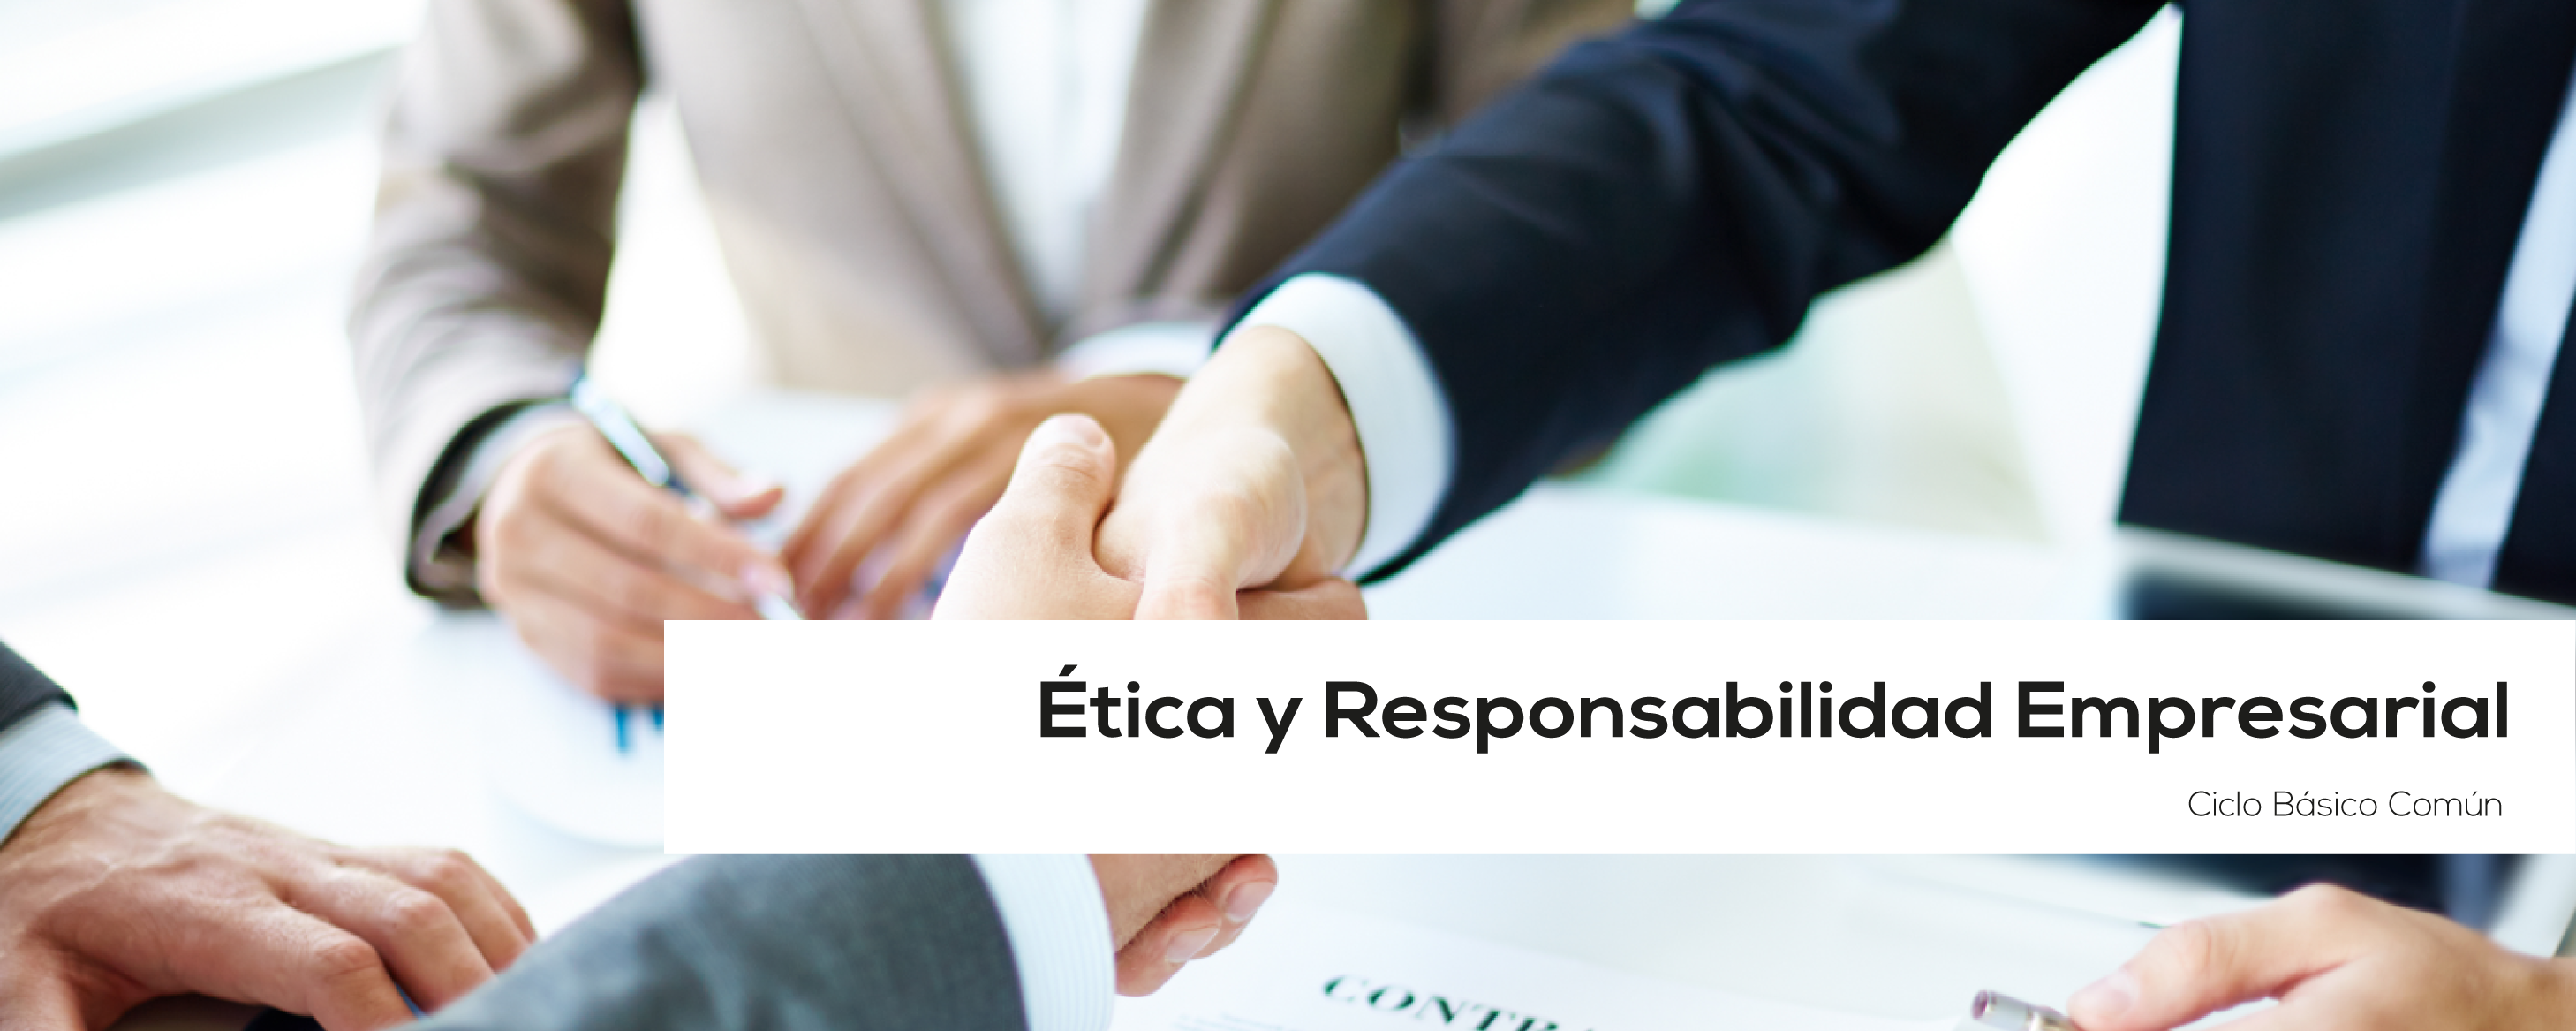 BUA 300 | 221WI-1B BUA 300 | Ética y responsabilidad empresarial| ABRIL 2021 